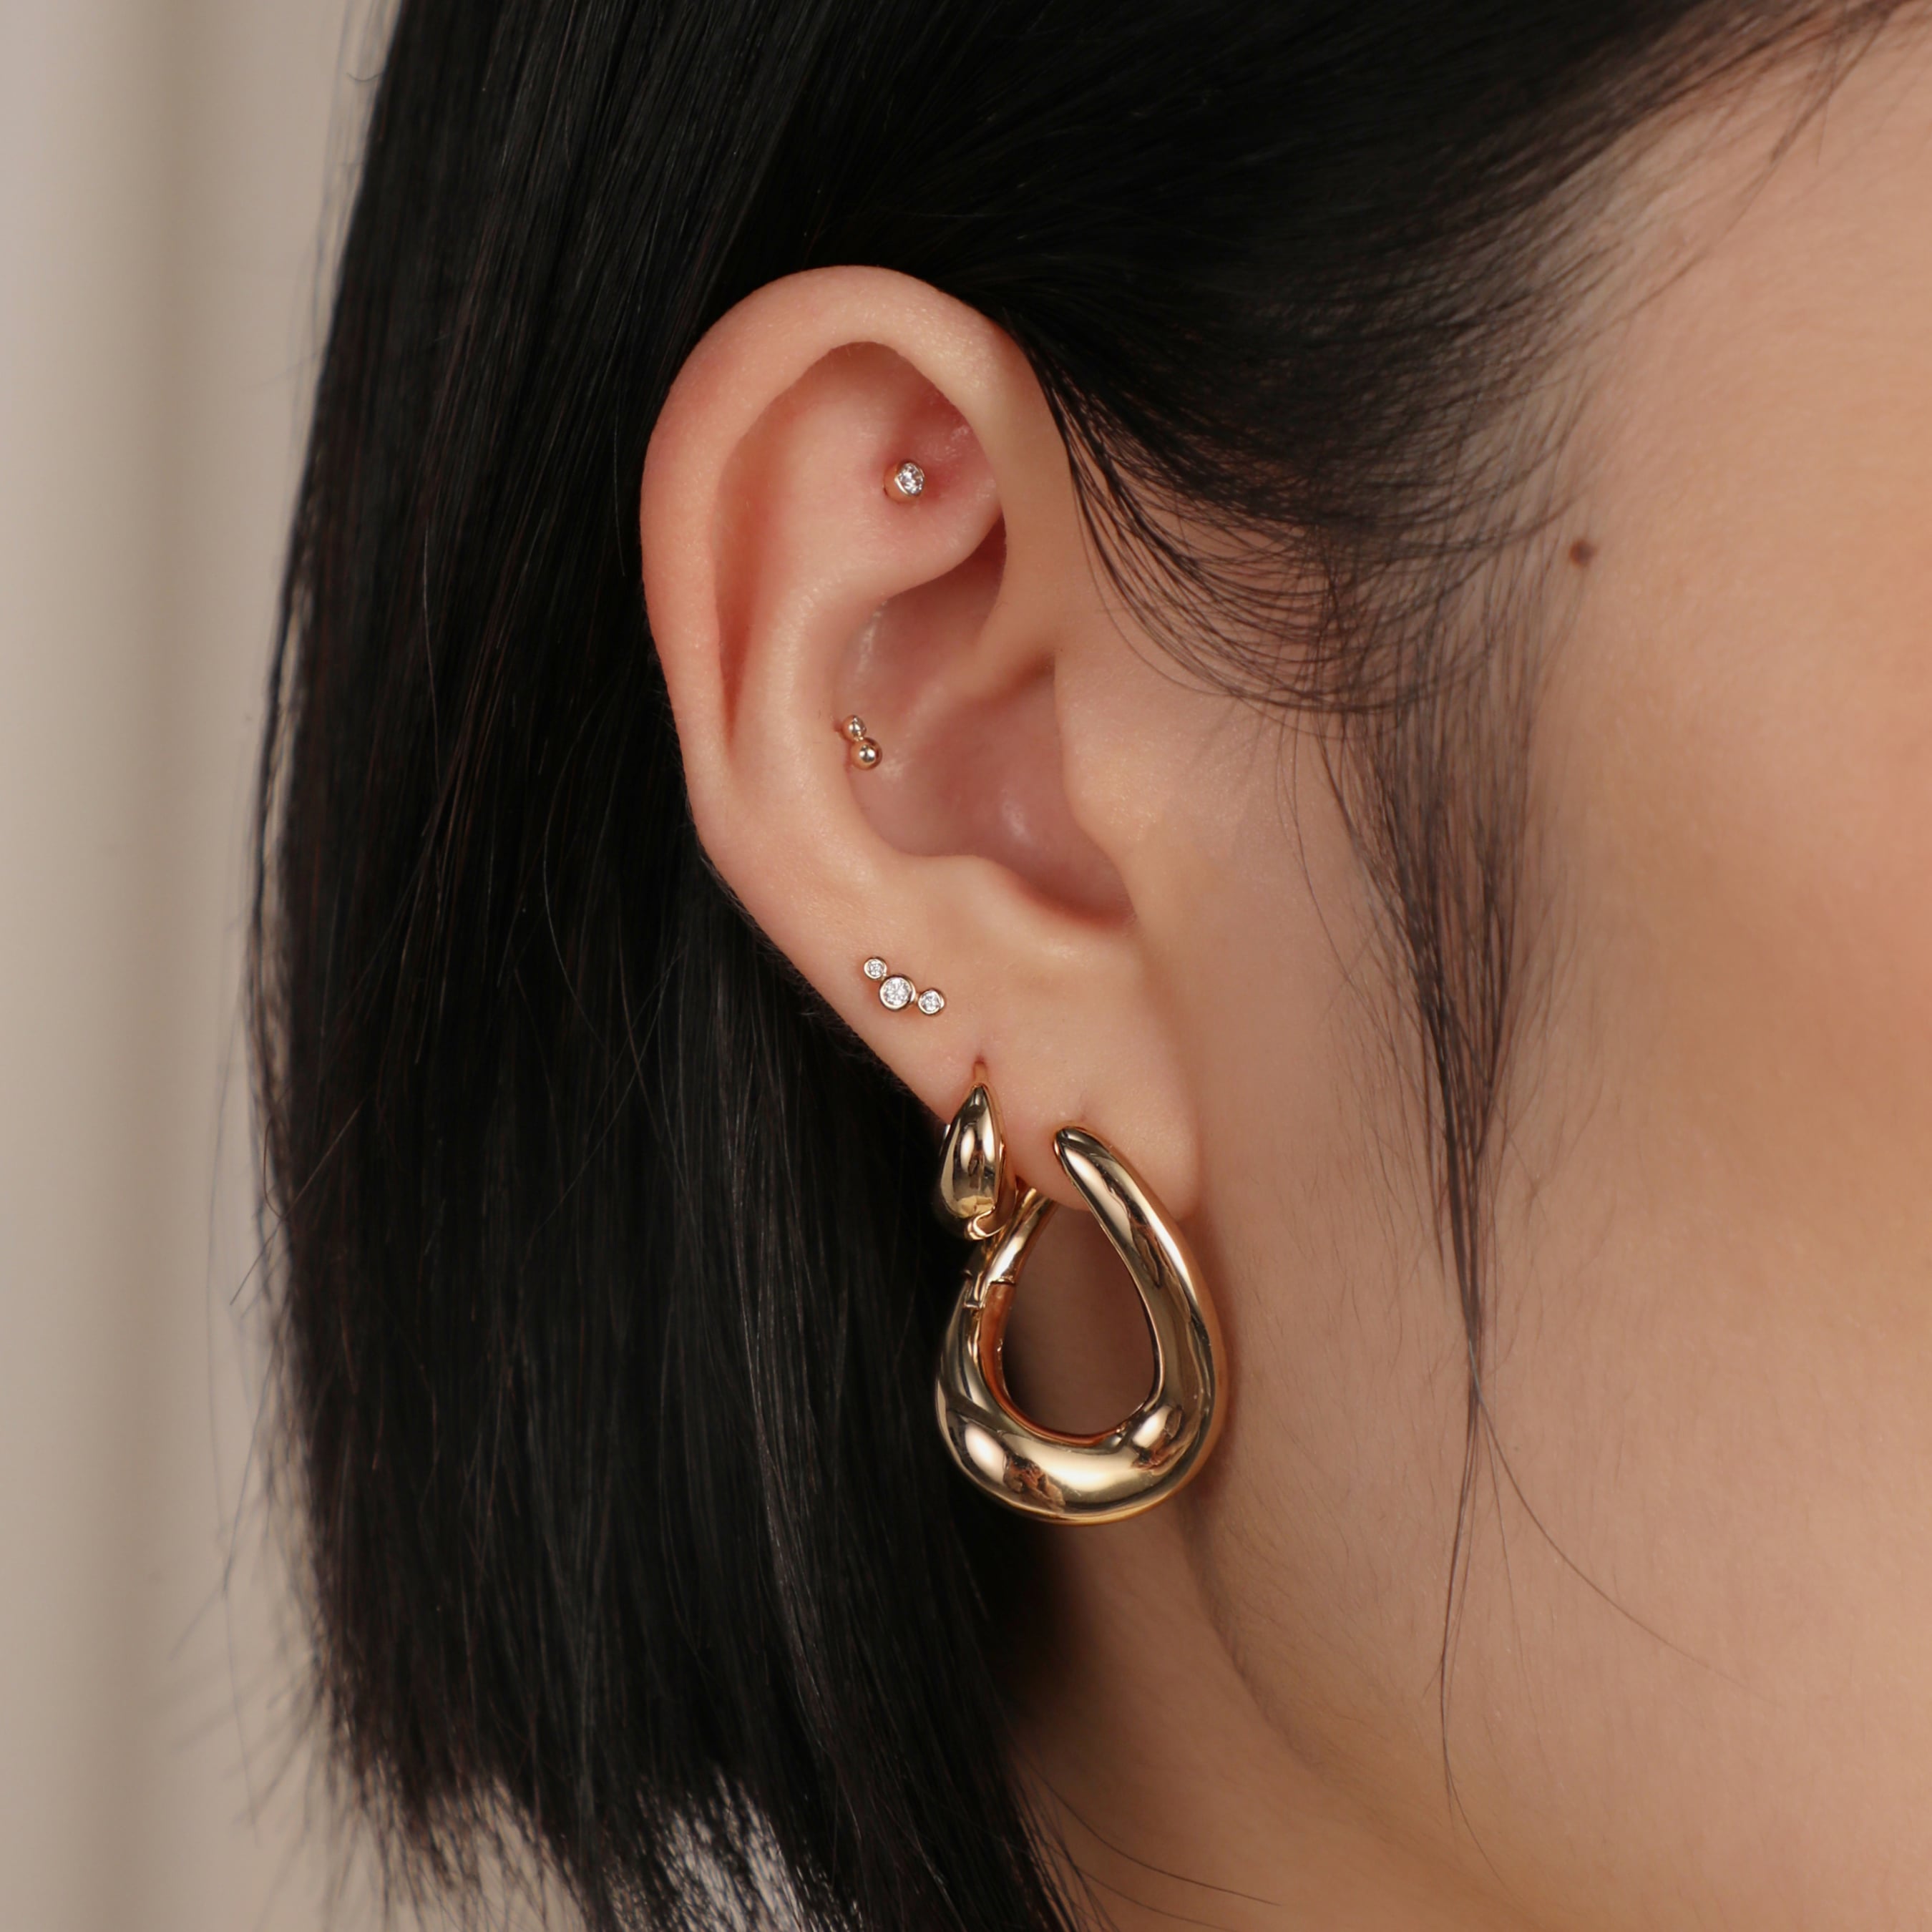 Kids Star Stud Earrings – Baby Gold